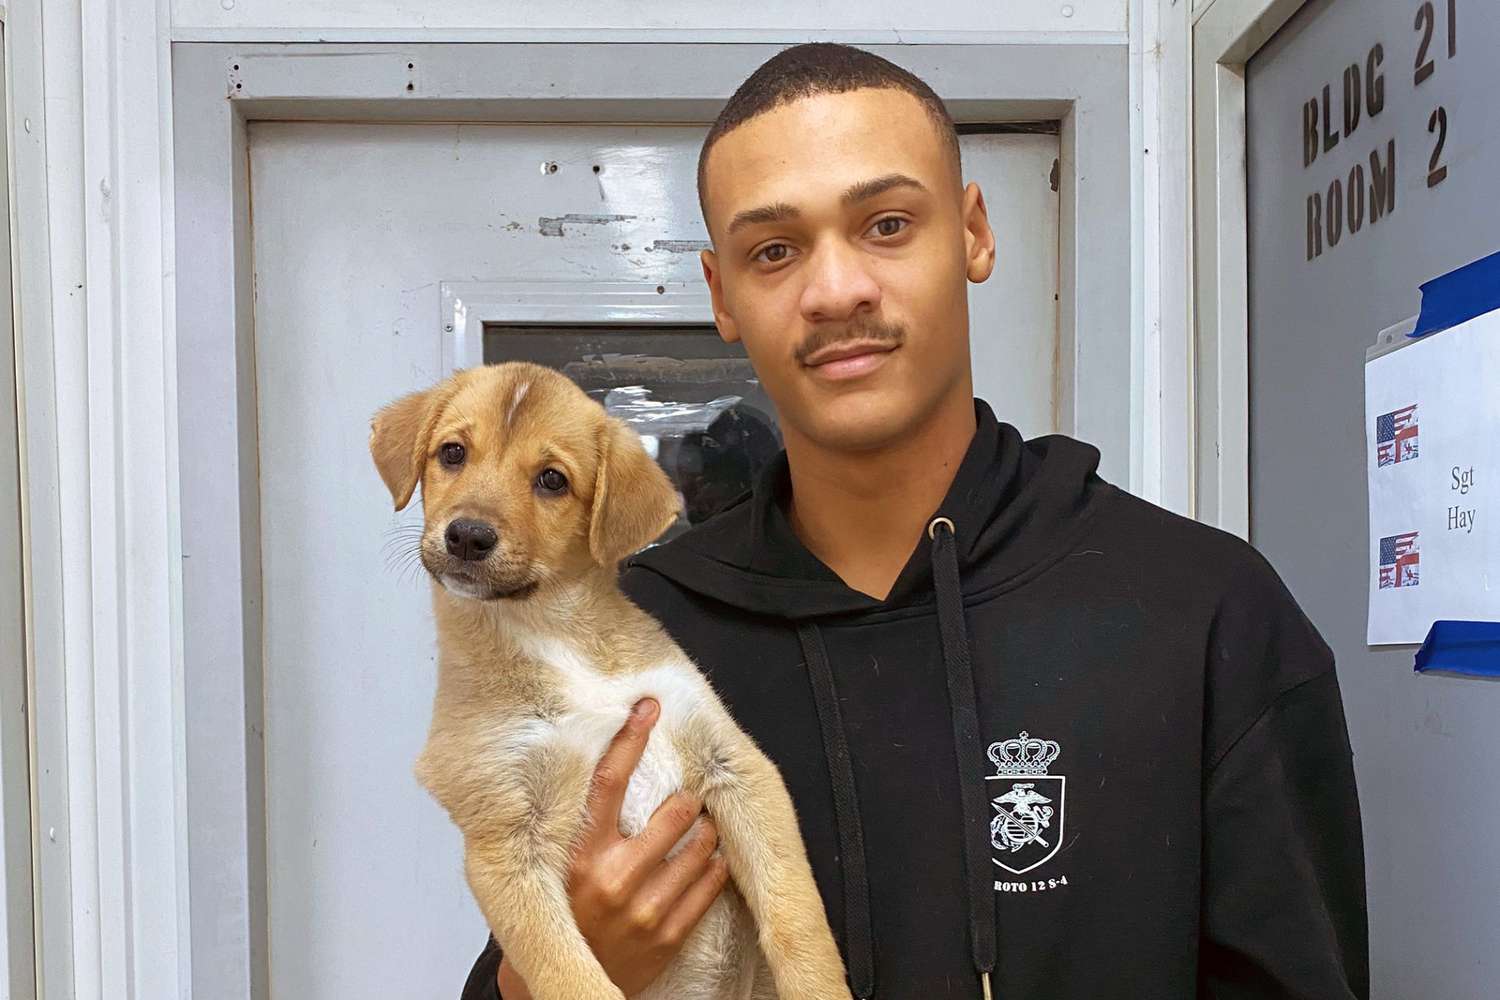 Adult black marine holds blond lab puppy in one hand